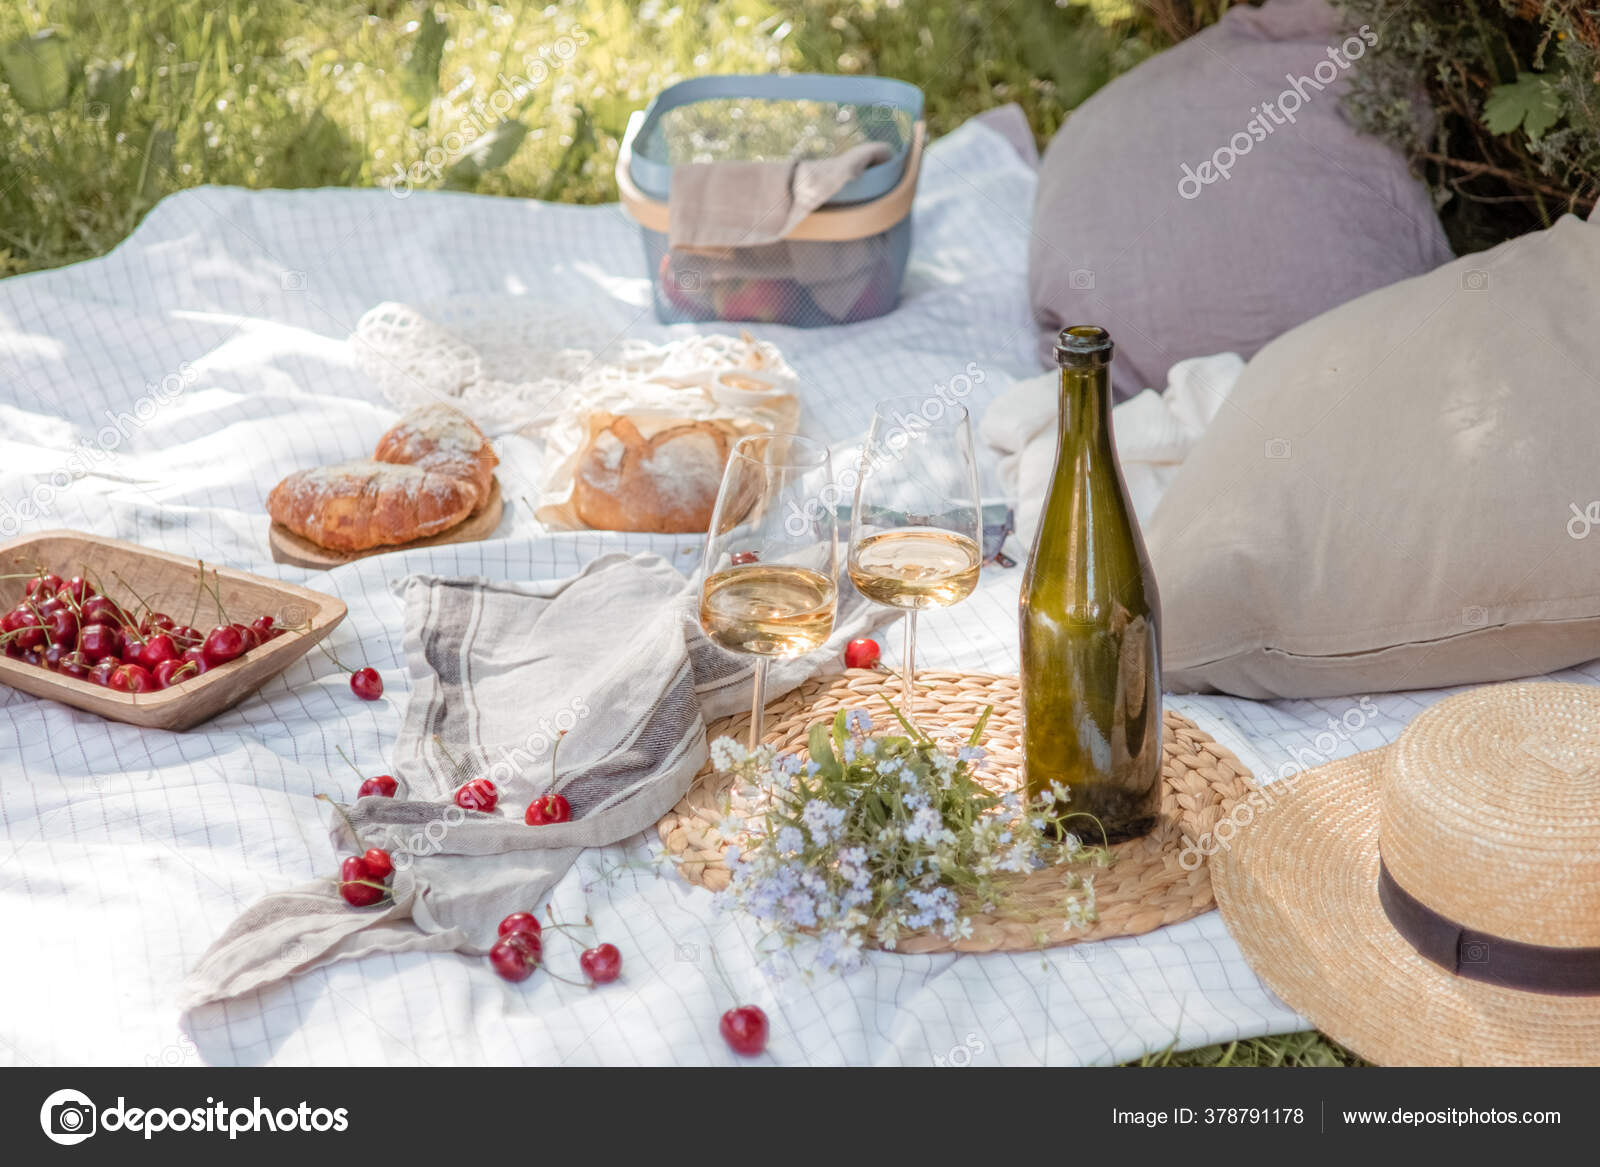 https://st4.depositphotos.com/7043918/37879/i/1600/depositphotos_378791178-stock-photo-aesthetic-picnic-outdoors-with-wine.jpg